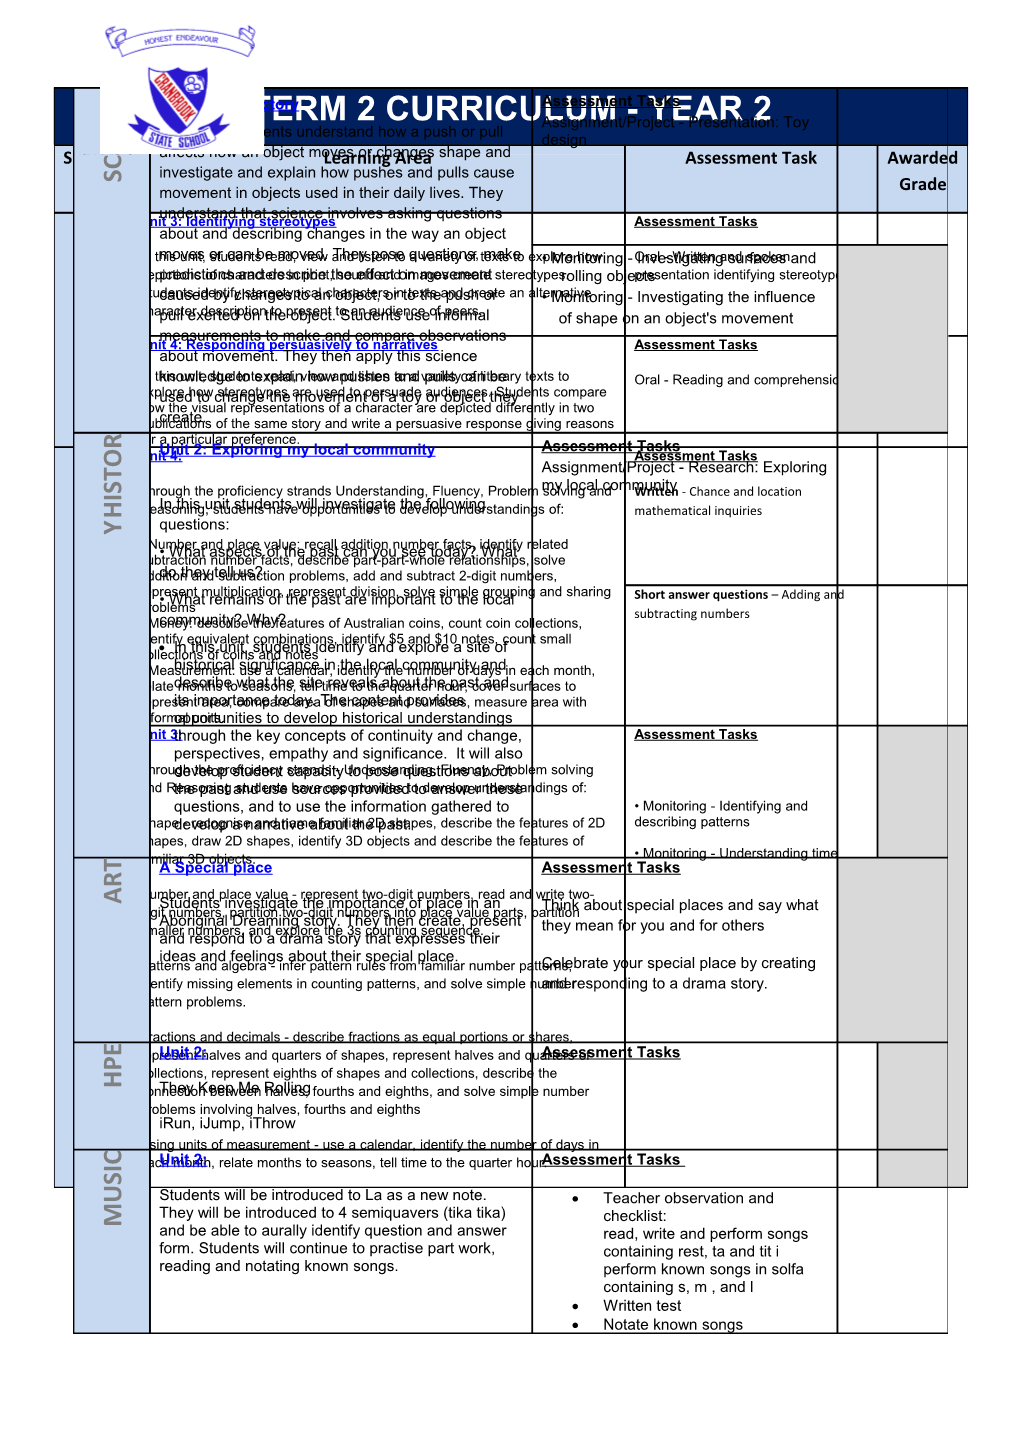 Teacher Observation and Checklist